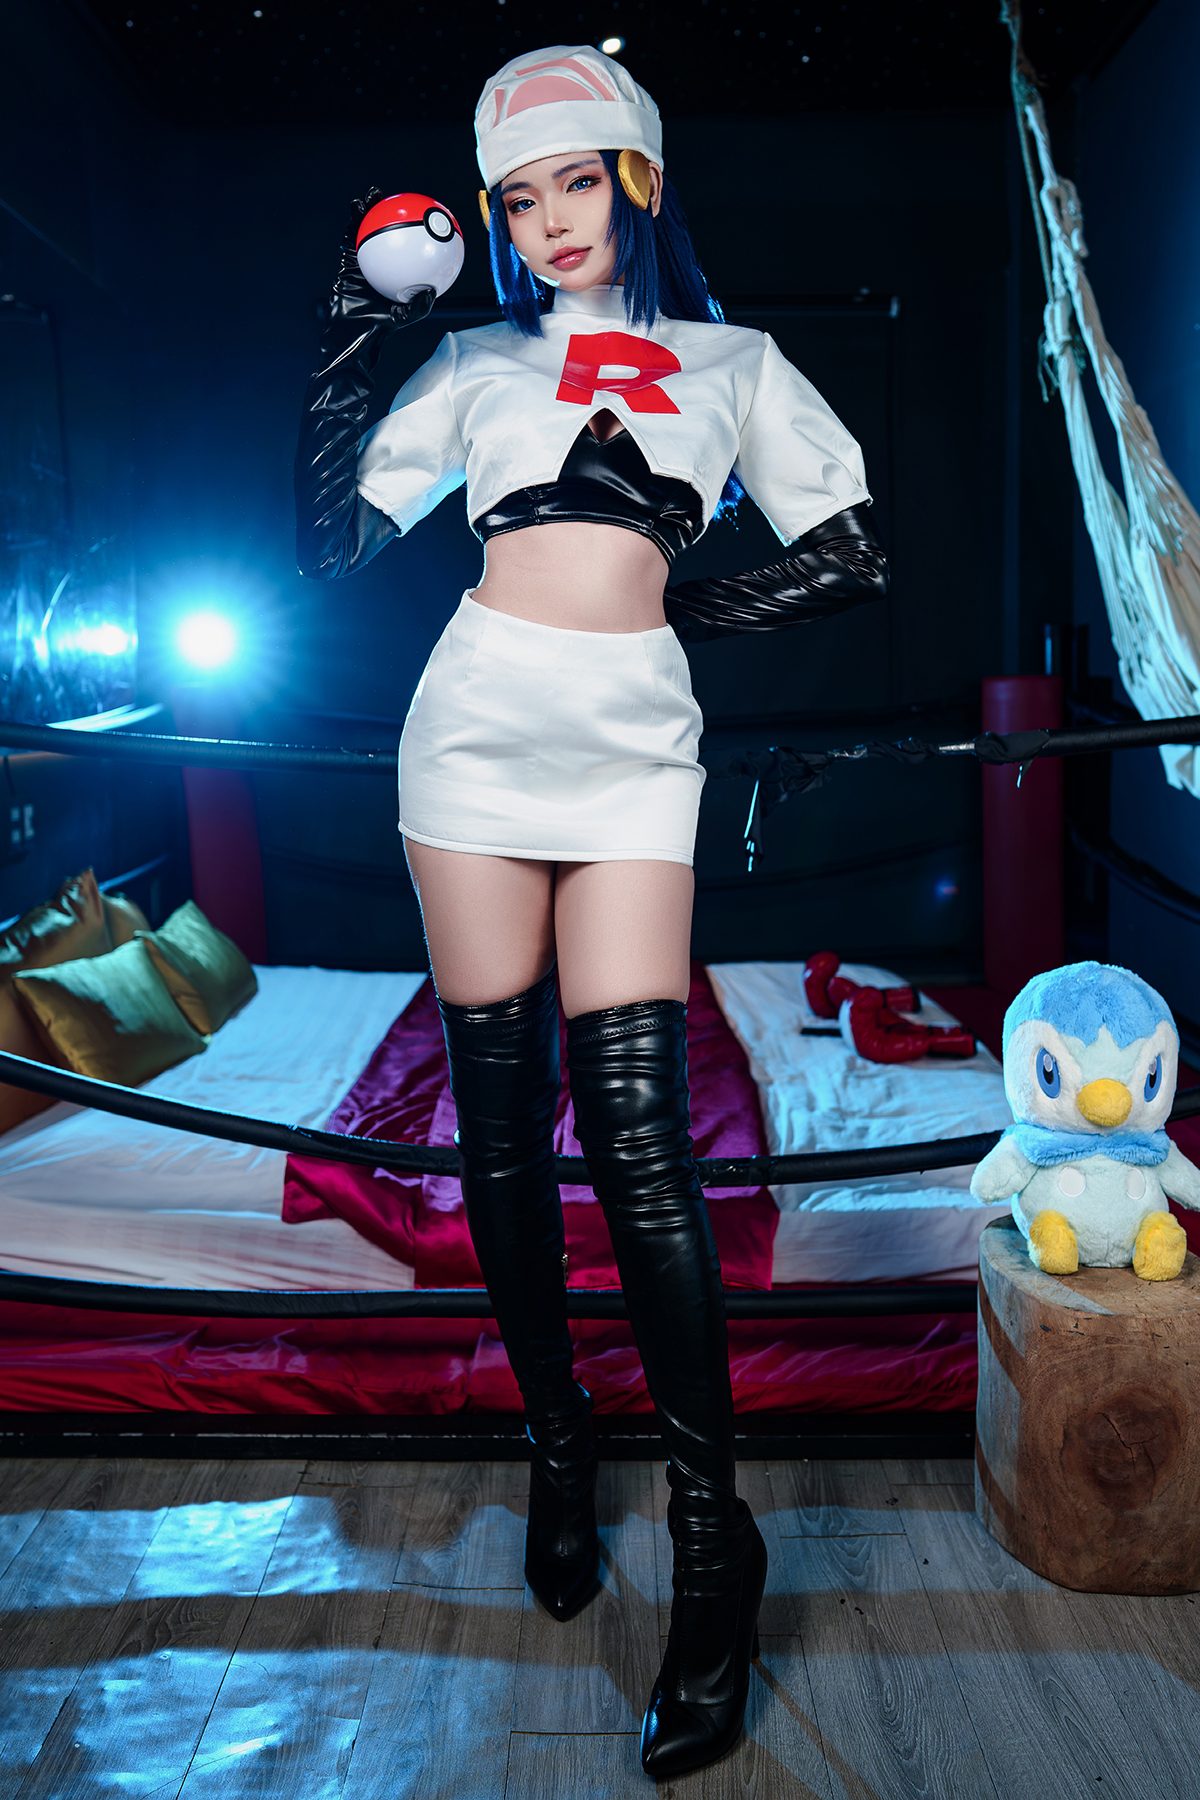 Coser@ZinieQ Dawn Pokemon In Team Rocket Costume 0034 7925684823.jpg